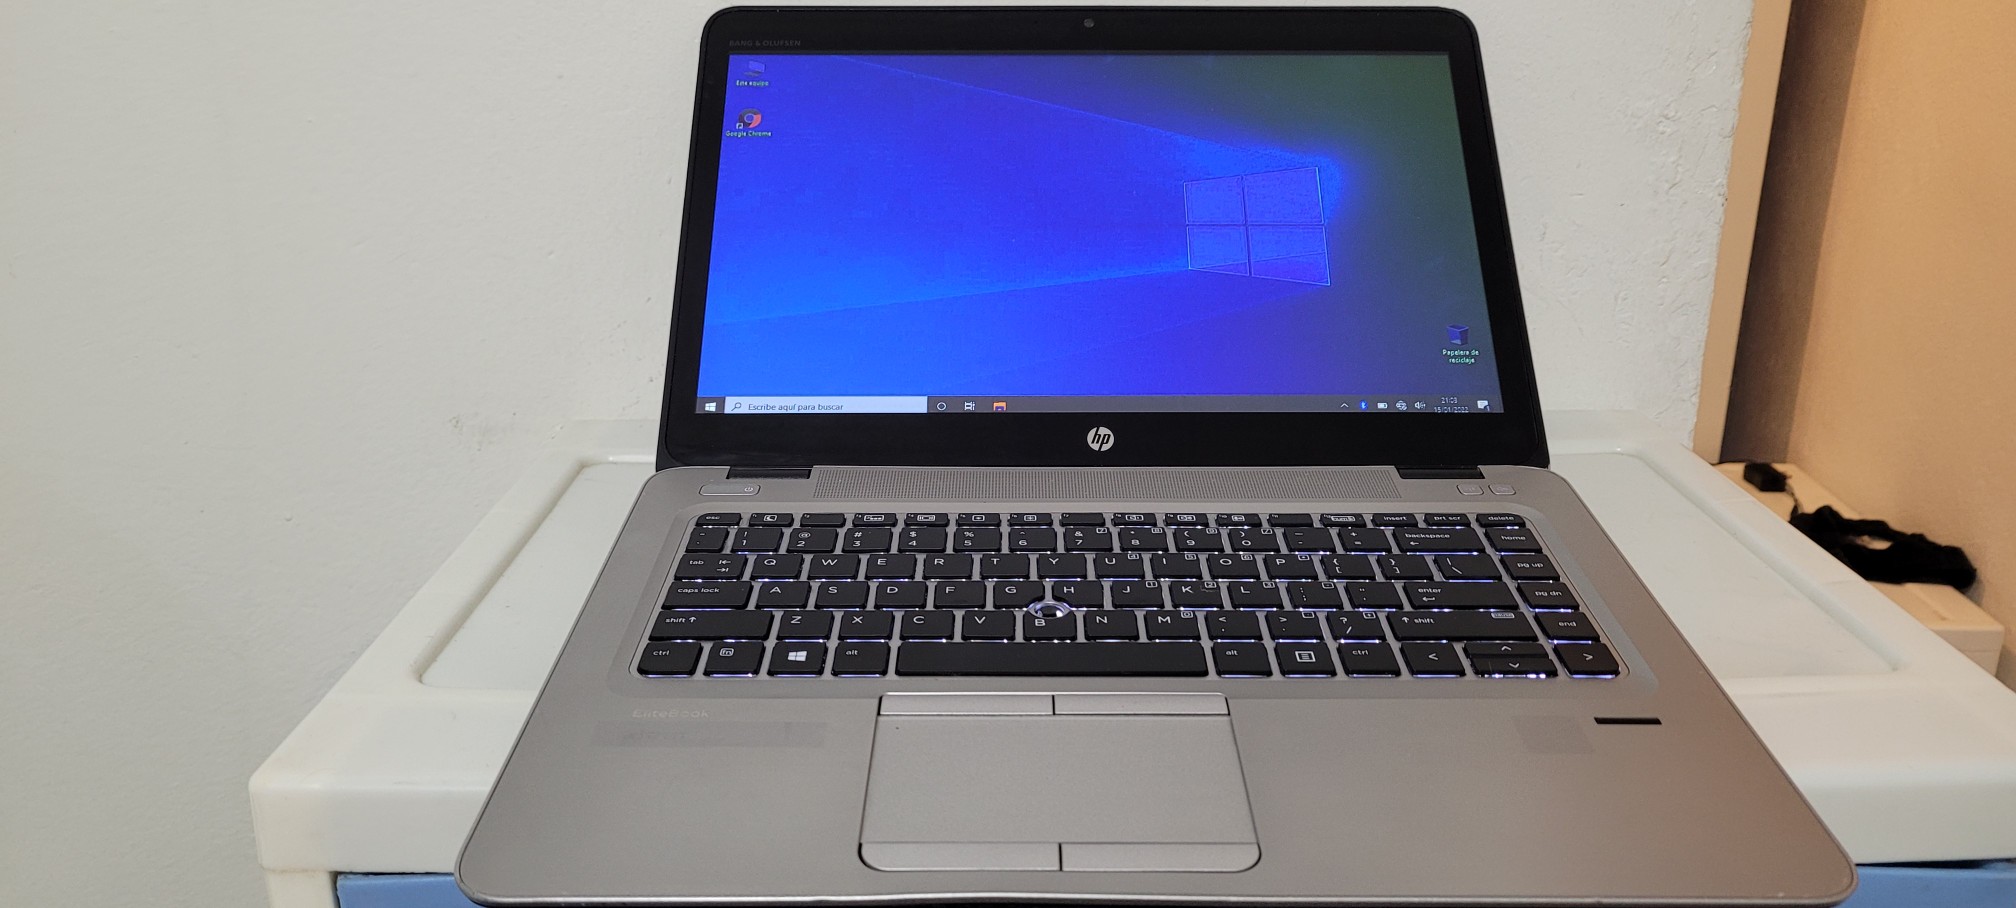 computadoras y laptops - Laptop hp Touch Core i5 7ma Ram 8gb ddr4 Disco 500gb Full